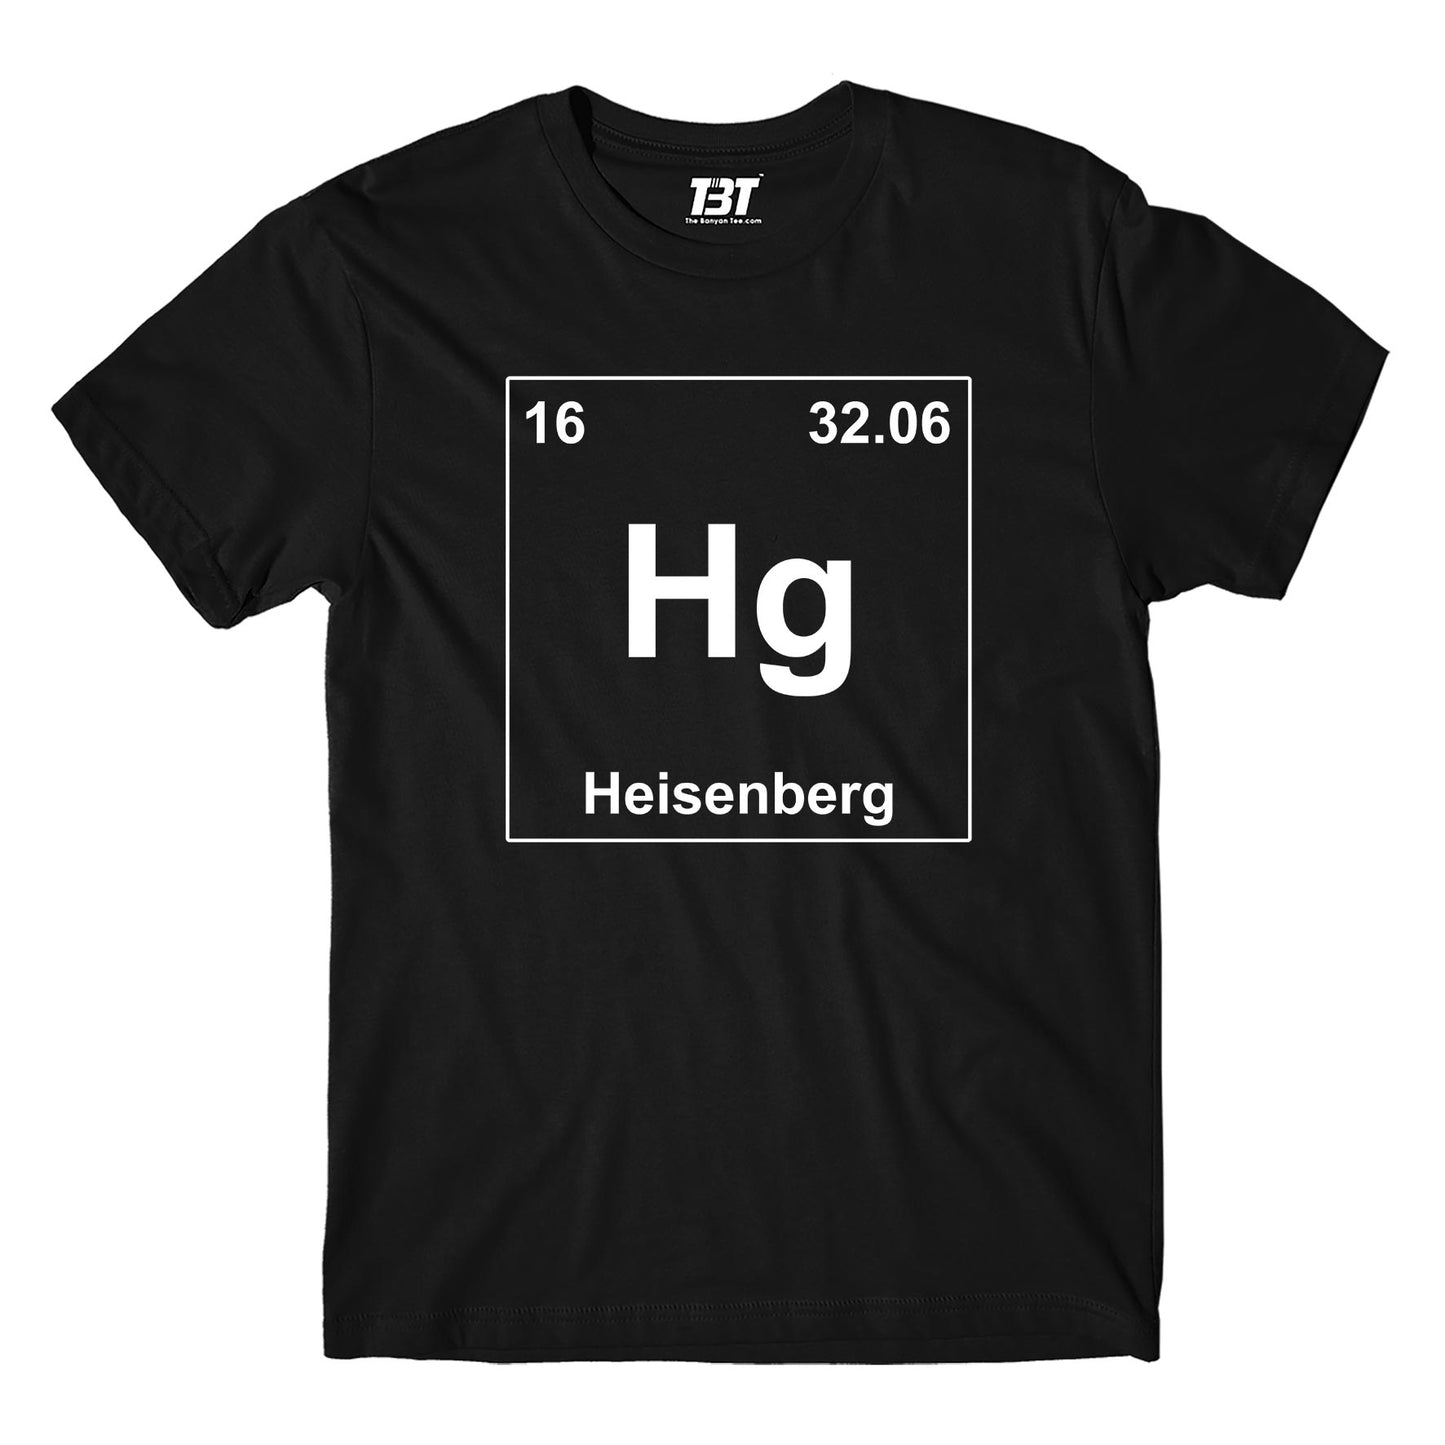 Breaking Bad T-shirt - Heisenberg by The Banyan Tee TBT